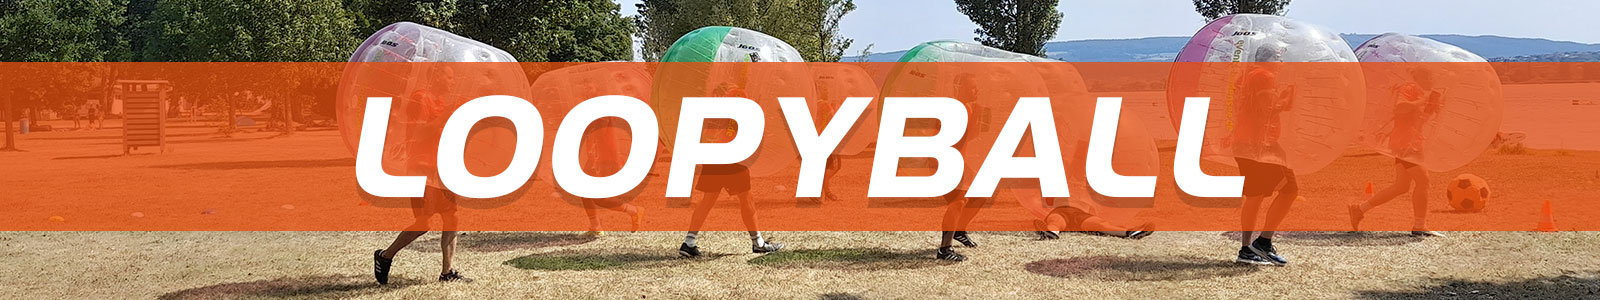 Loopyball | Bubble Fussball